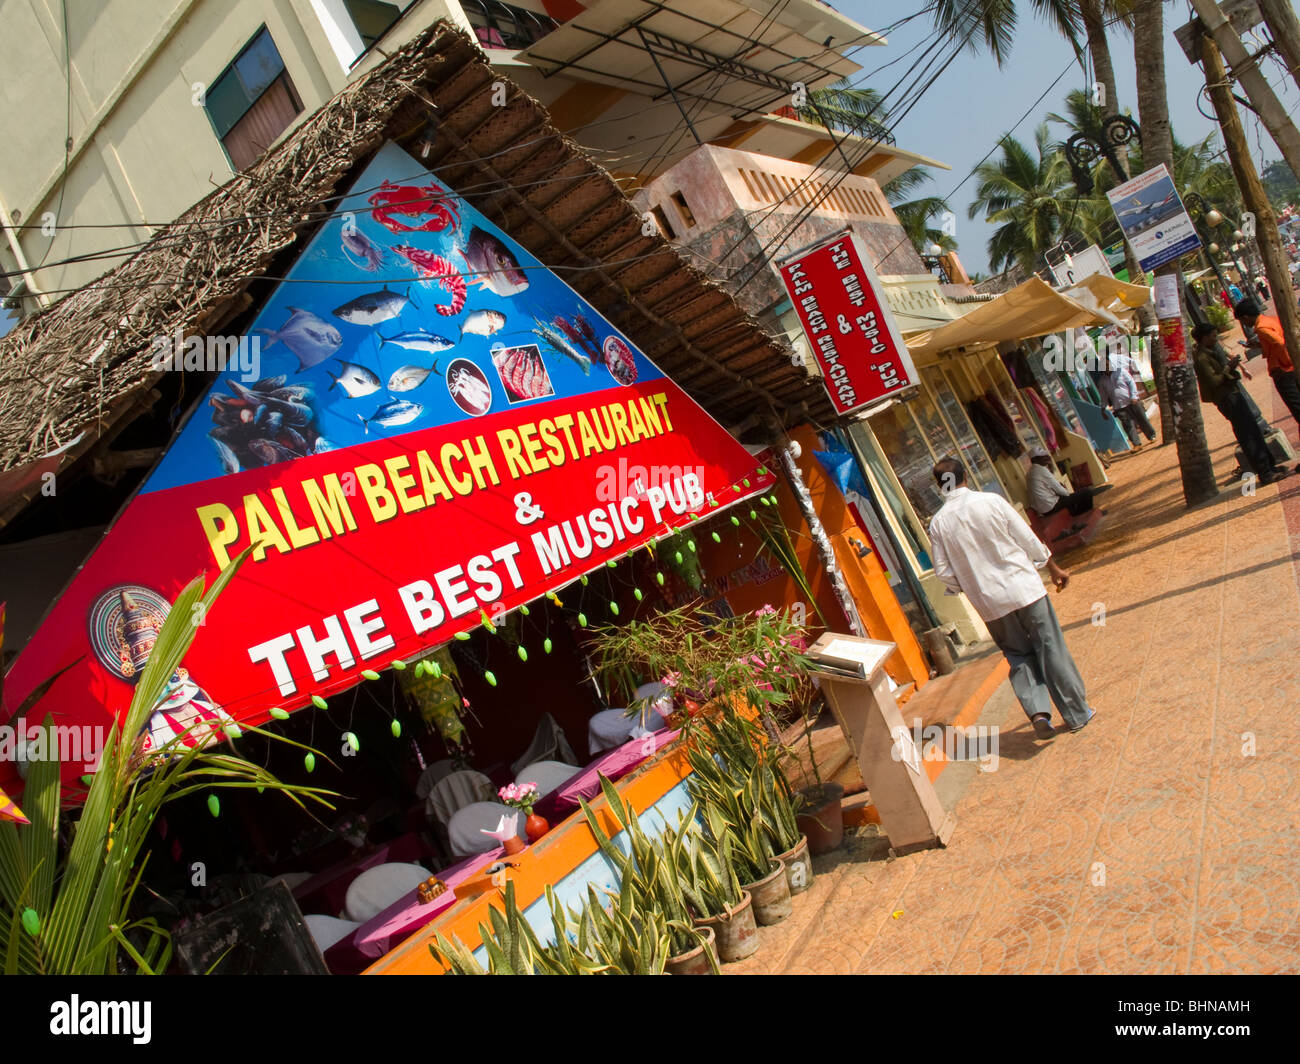 Lighthouse (Adam) Beach, Palm Beach Restaurant am Meer die beste Musik-Pub, Kovalam, Kerala, Indien Stockfoto